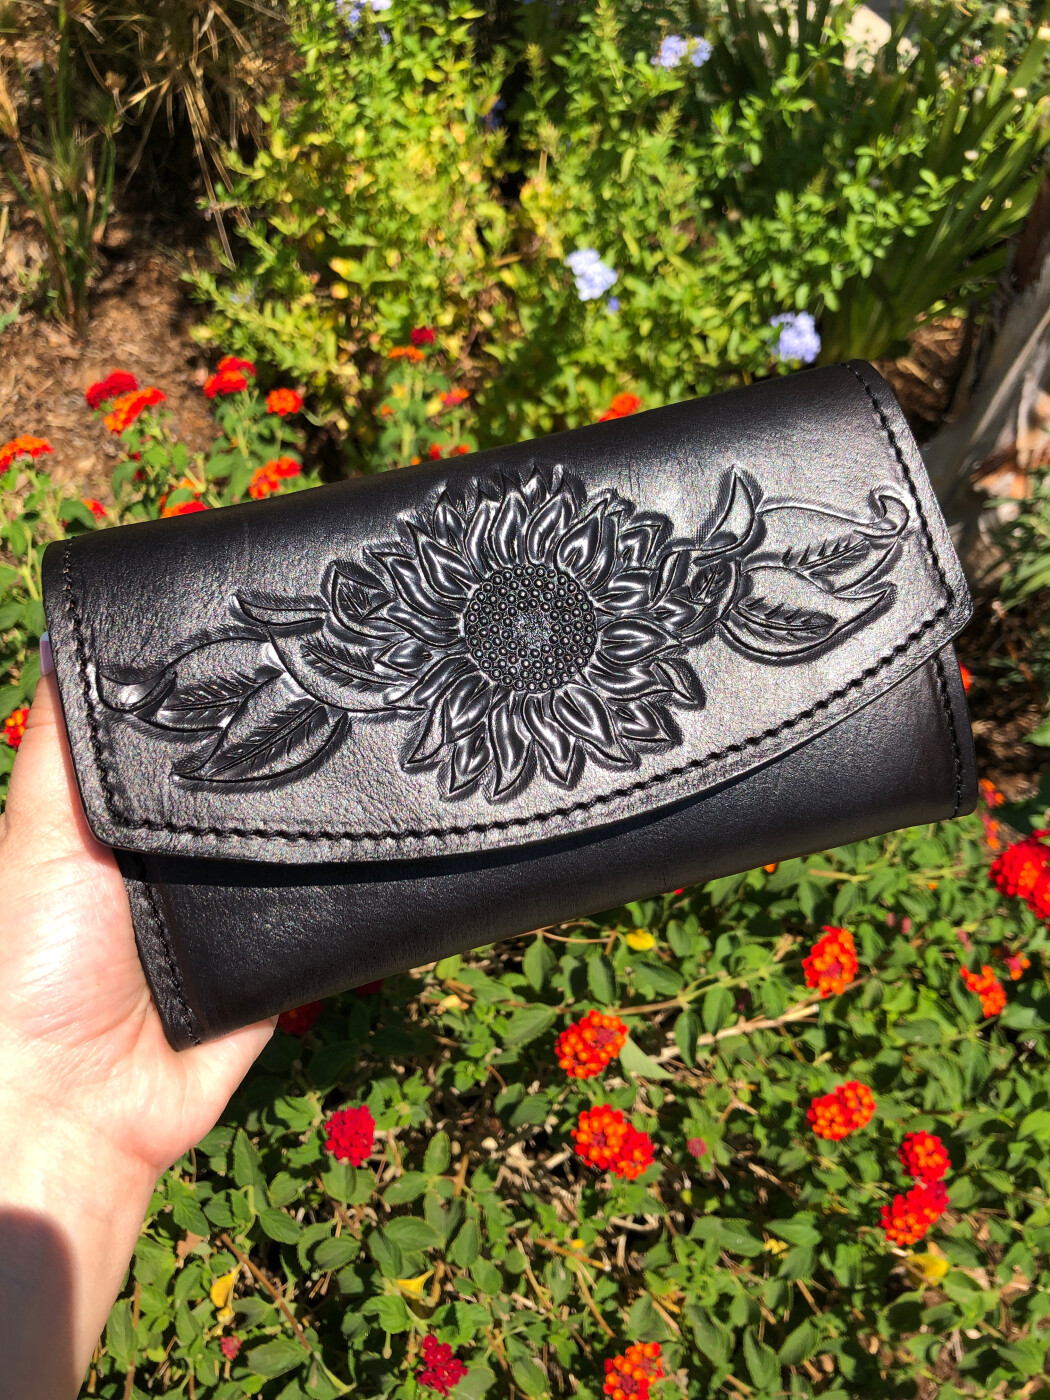 Black Leather Wallets